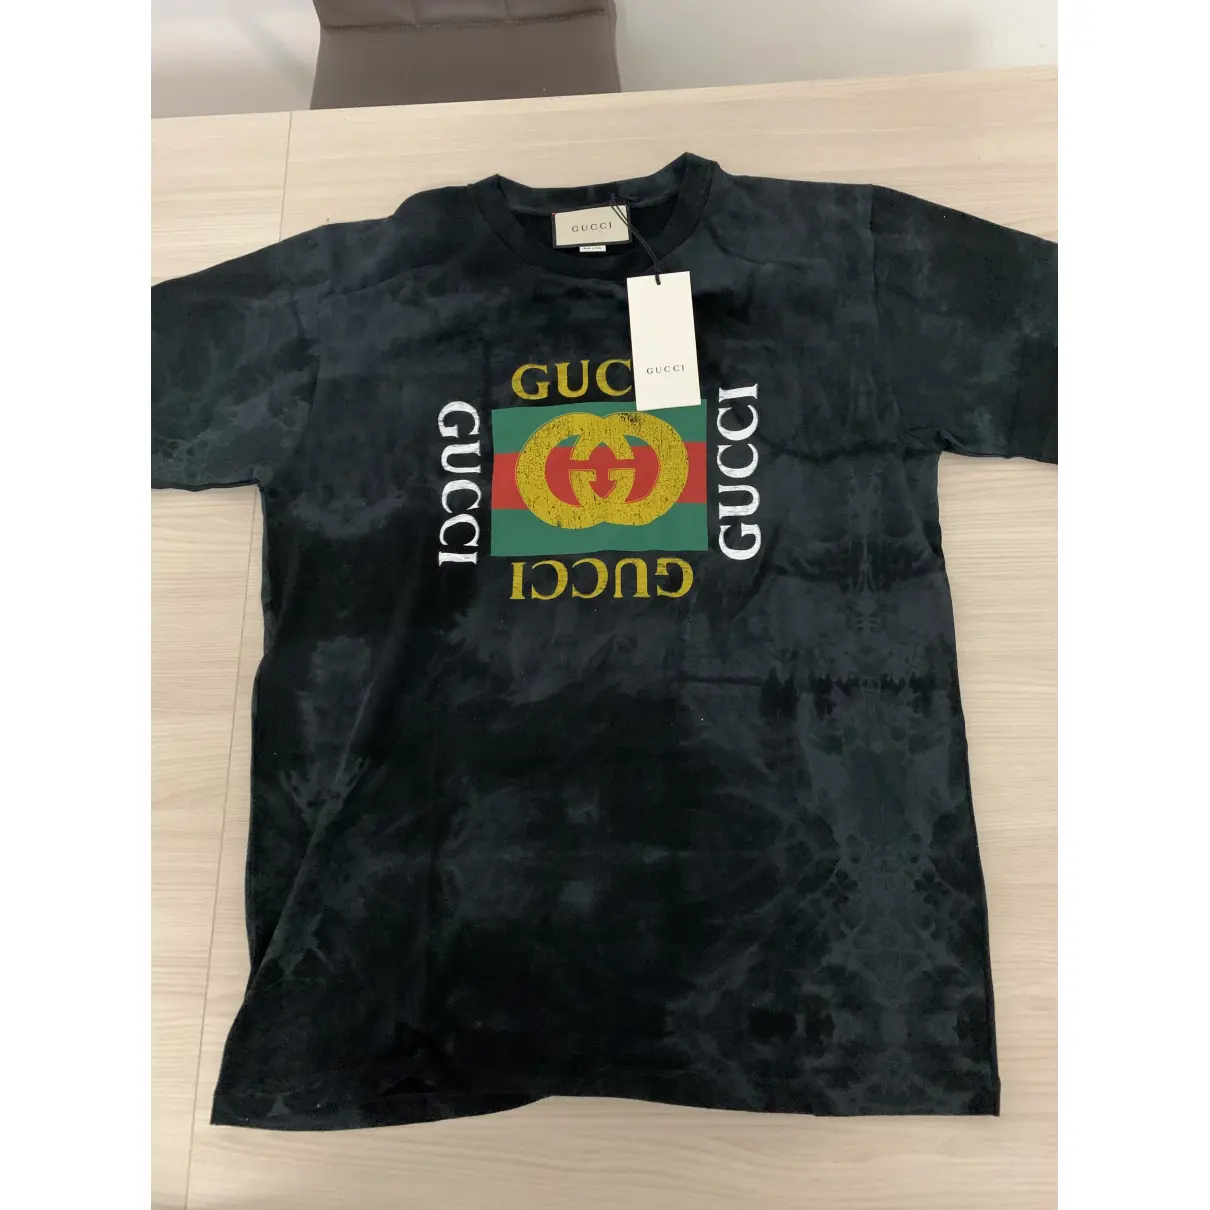 Buy Gucci Black Cotton T-shirt online